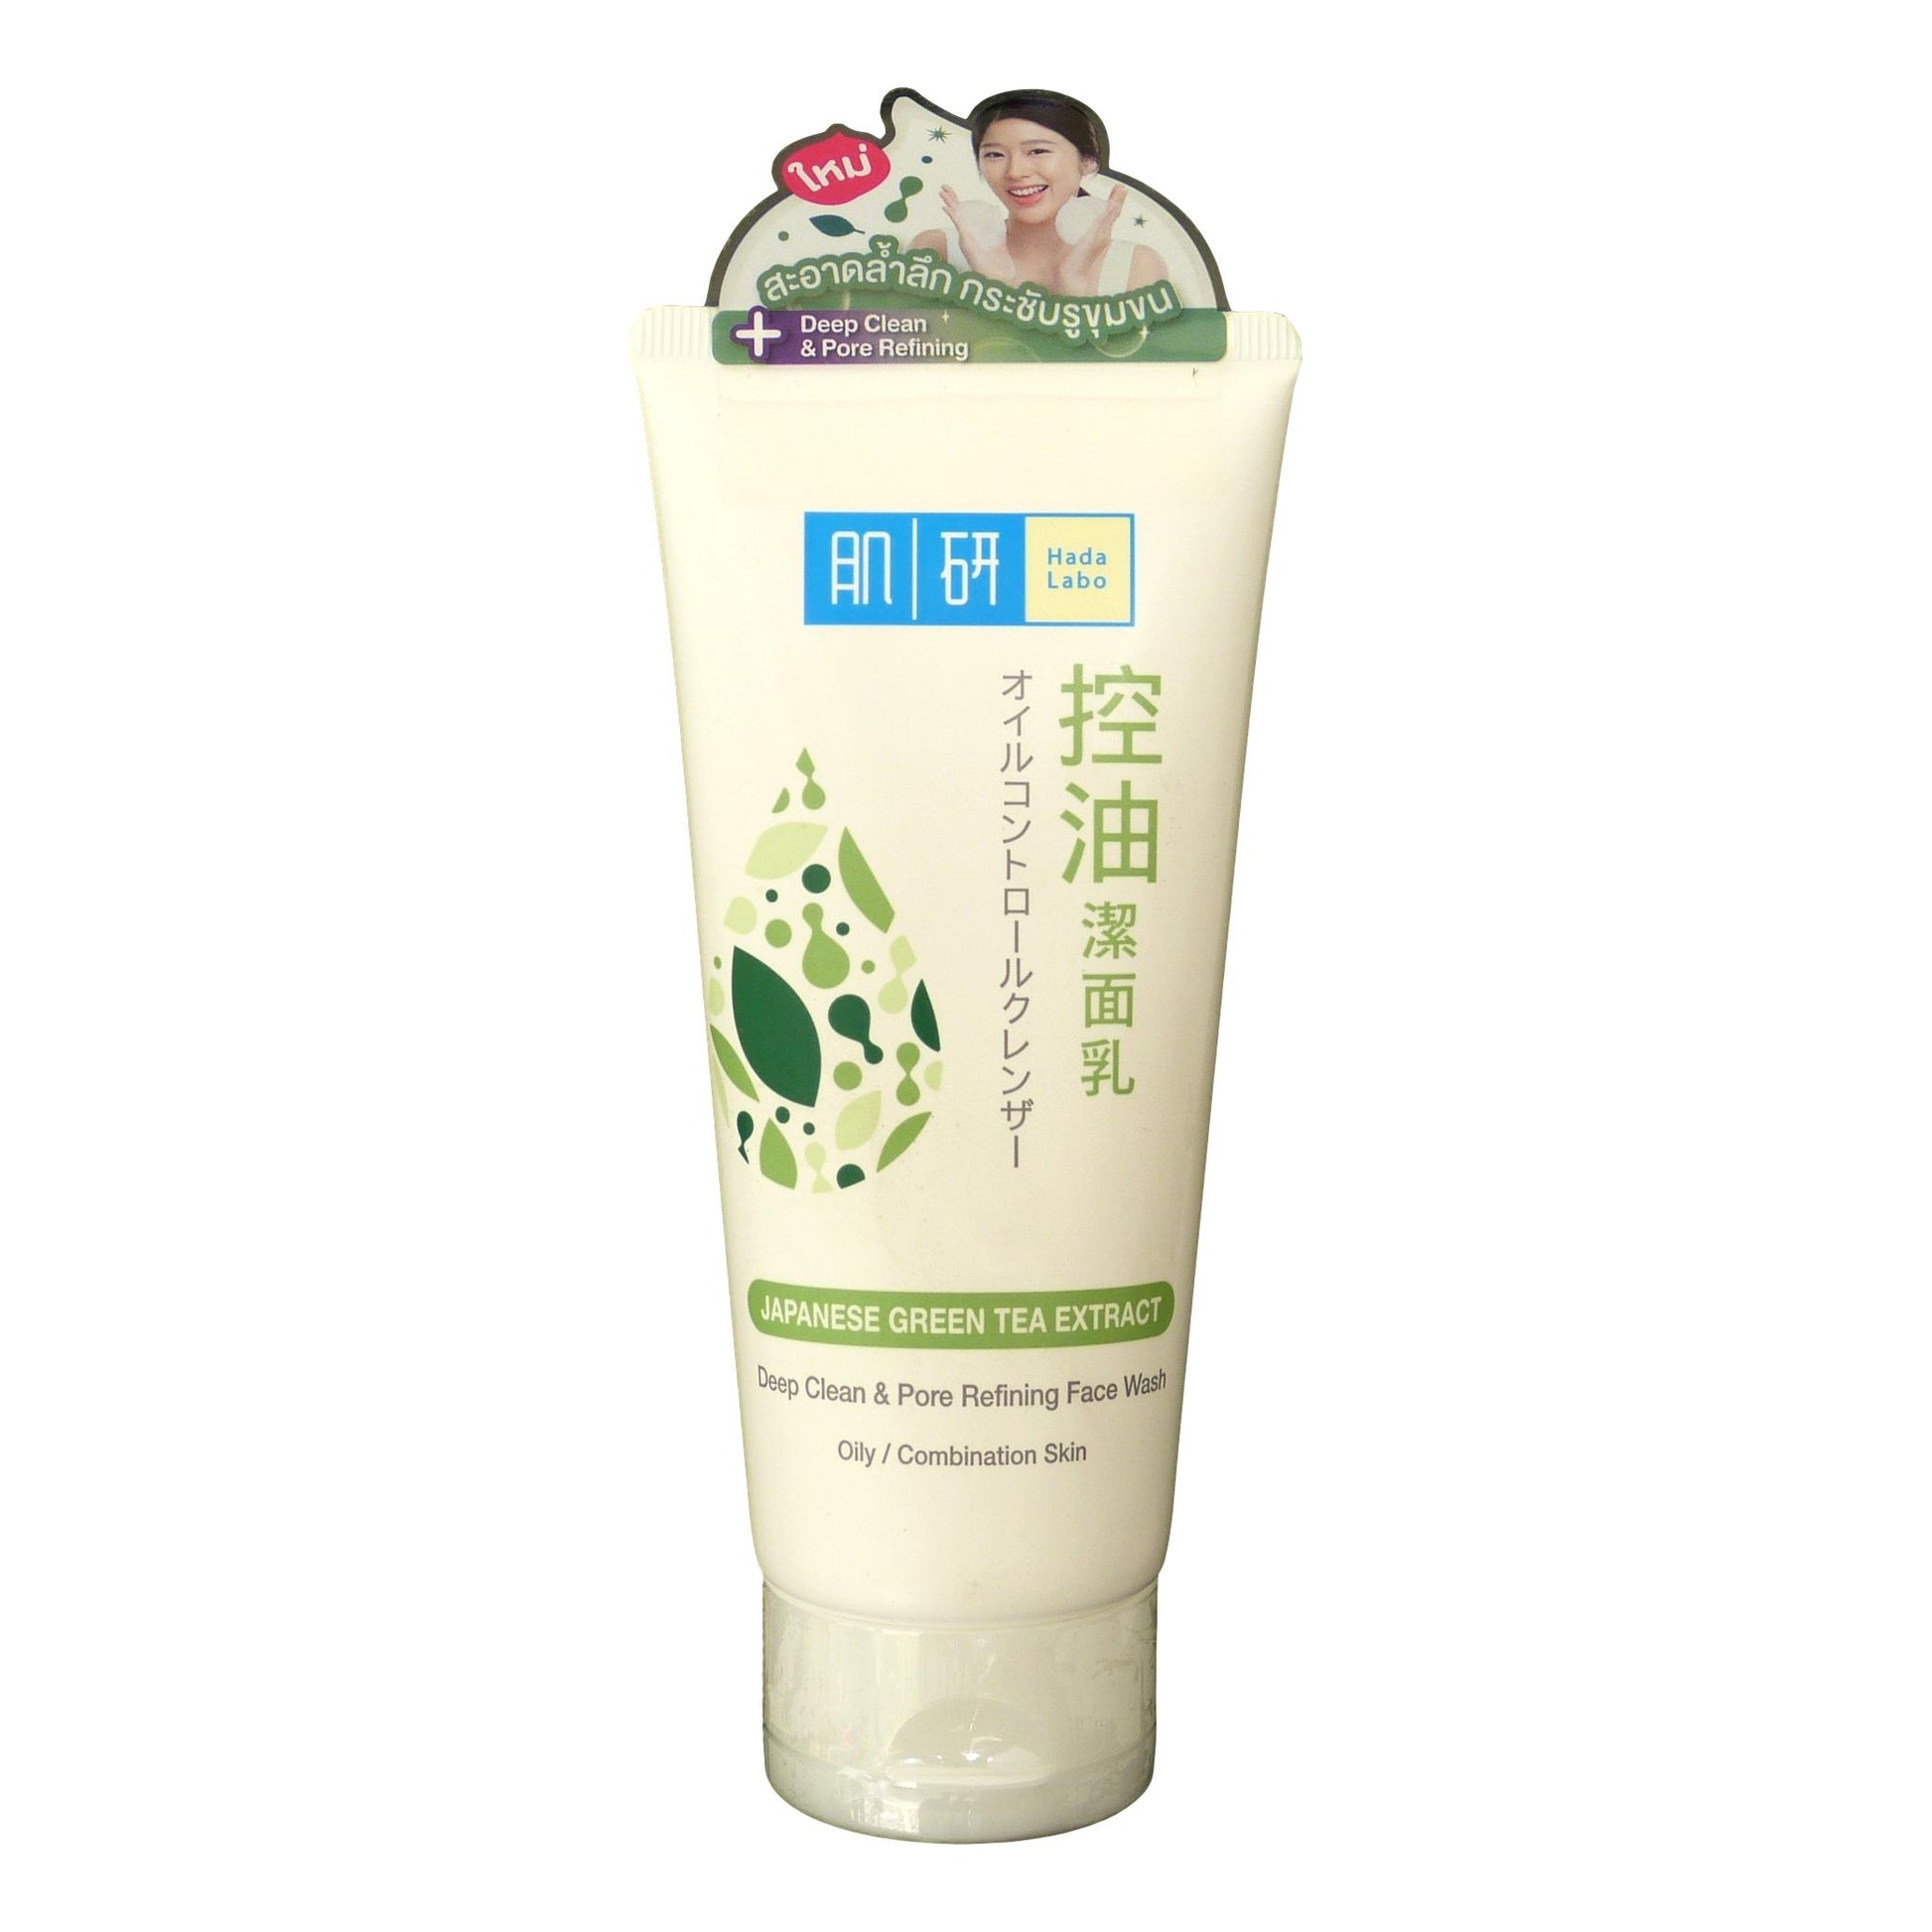 Hada Labo Deep Clean and Pore Refining Green Tea Face Wash 100g - Asian Beauty Supply